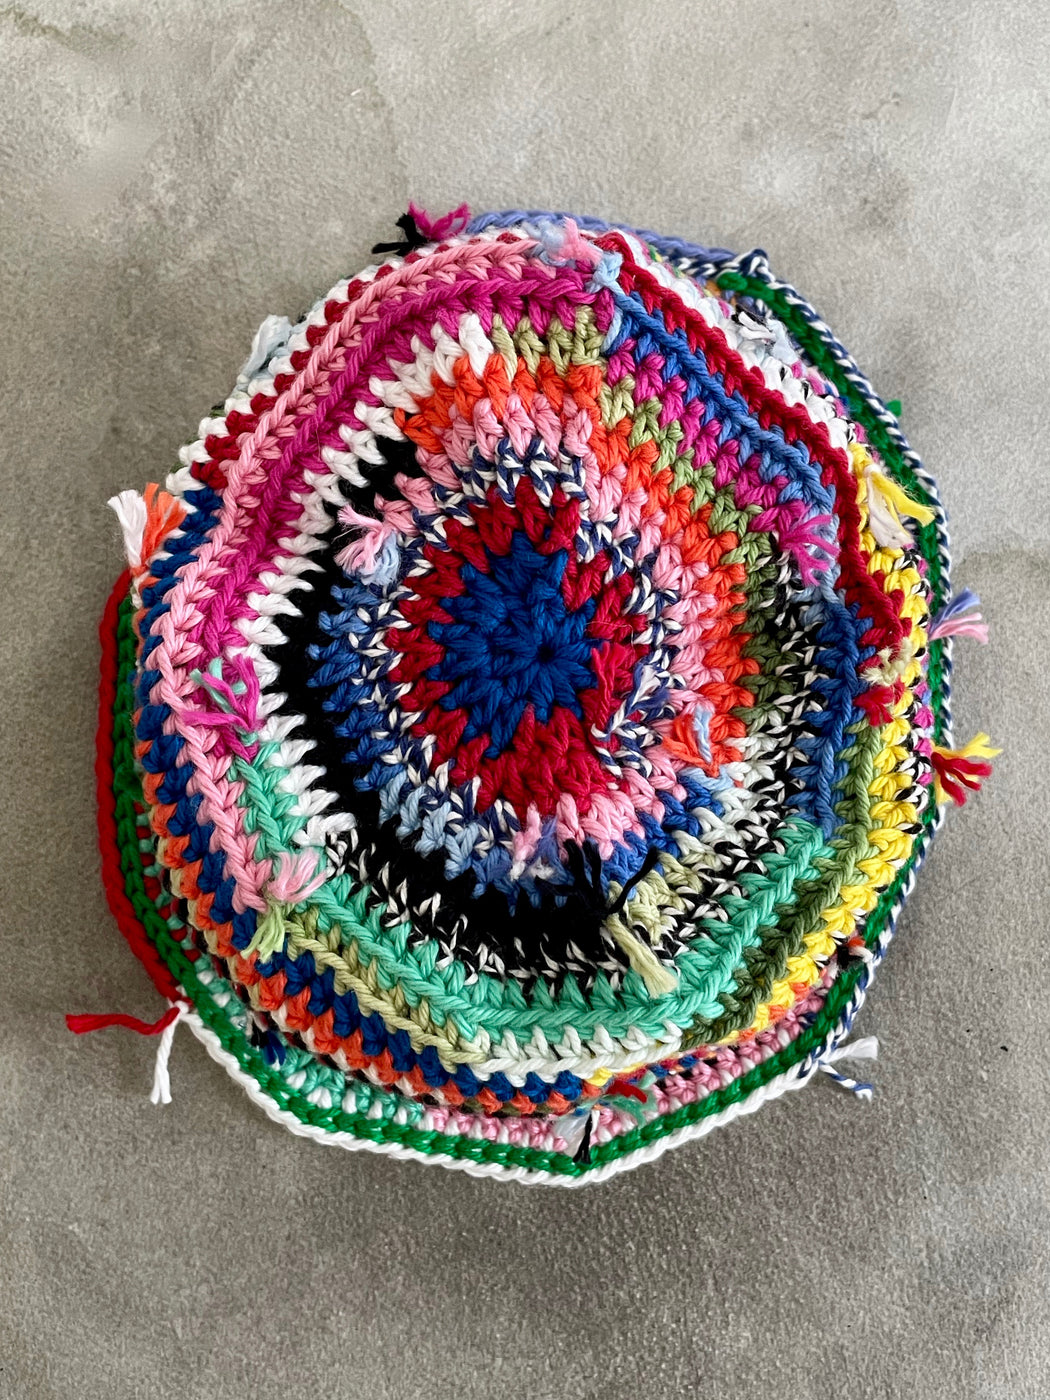 "Scrappy" Hand-Crocheted Bucket Hat by Albo